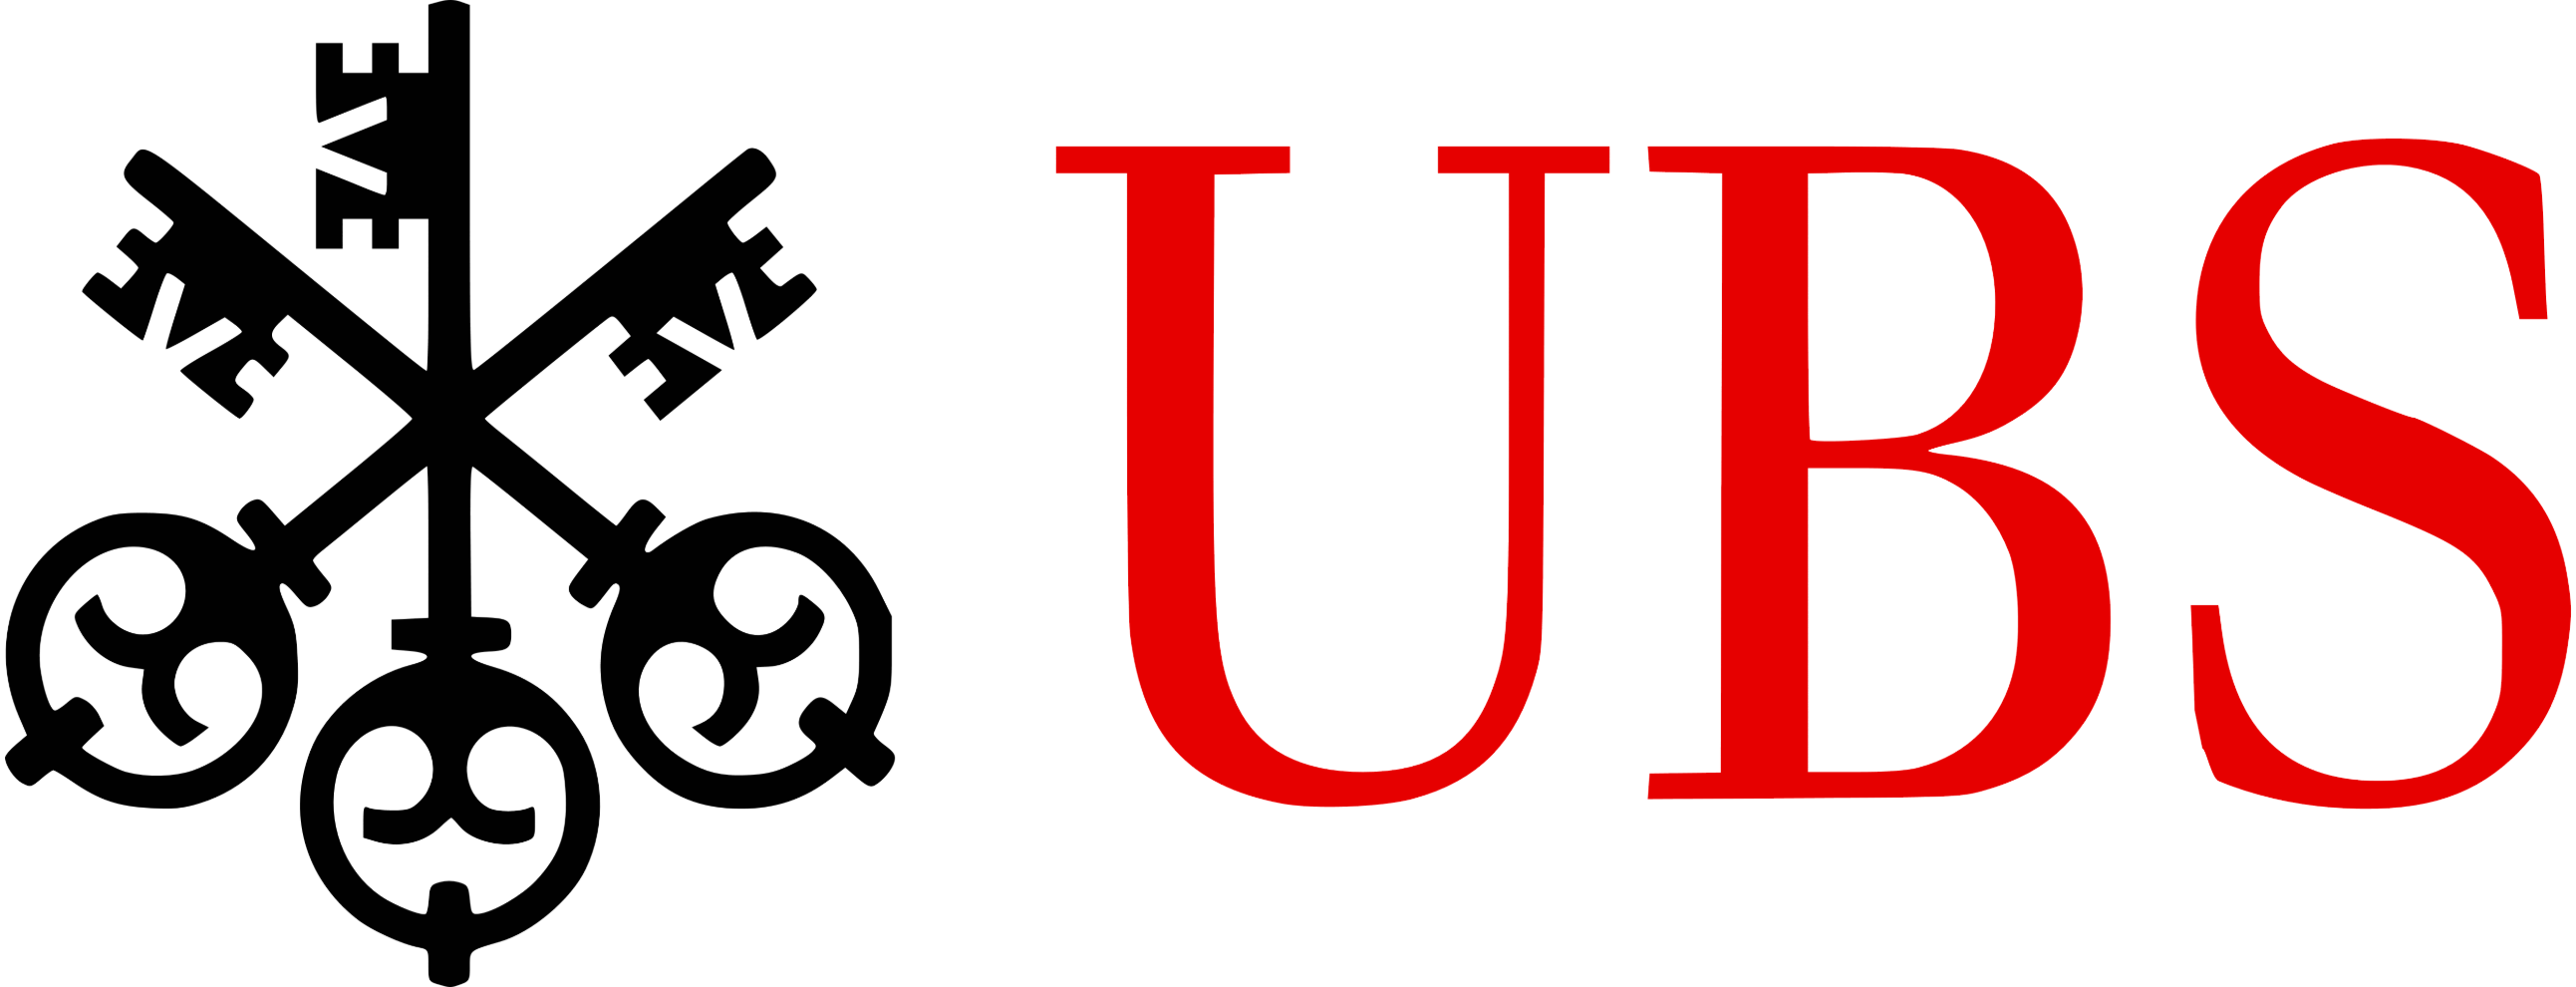 Ubs logo logotype emblem